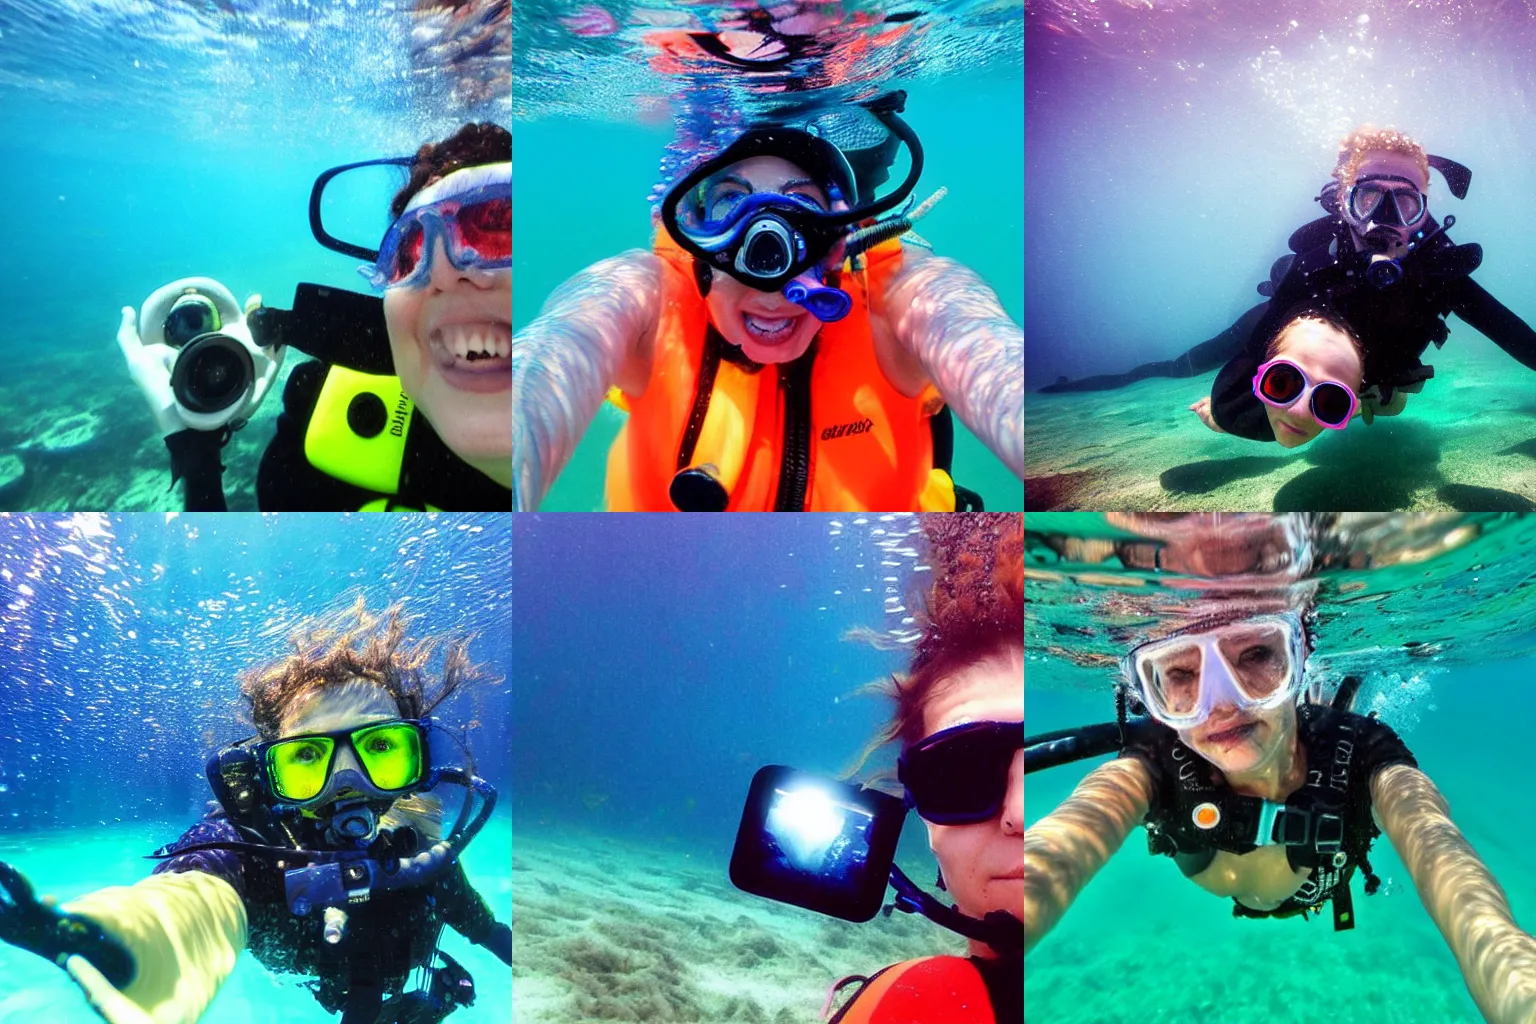 Prompt: A selfie taken underwater